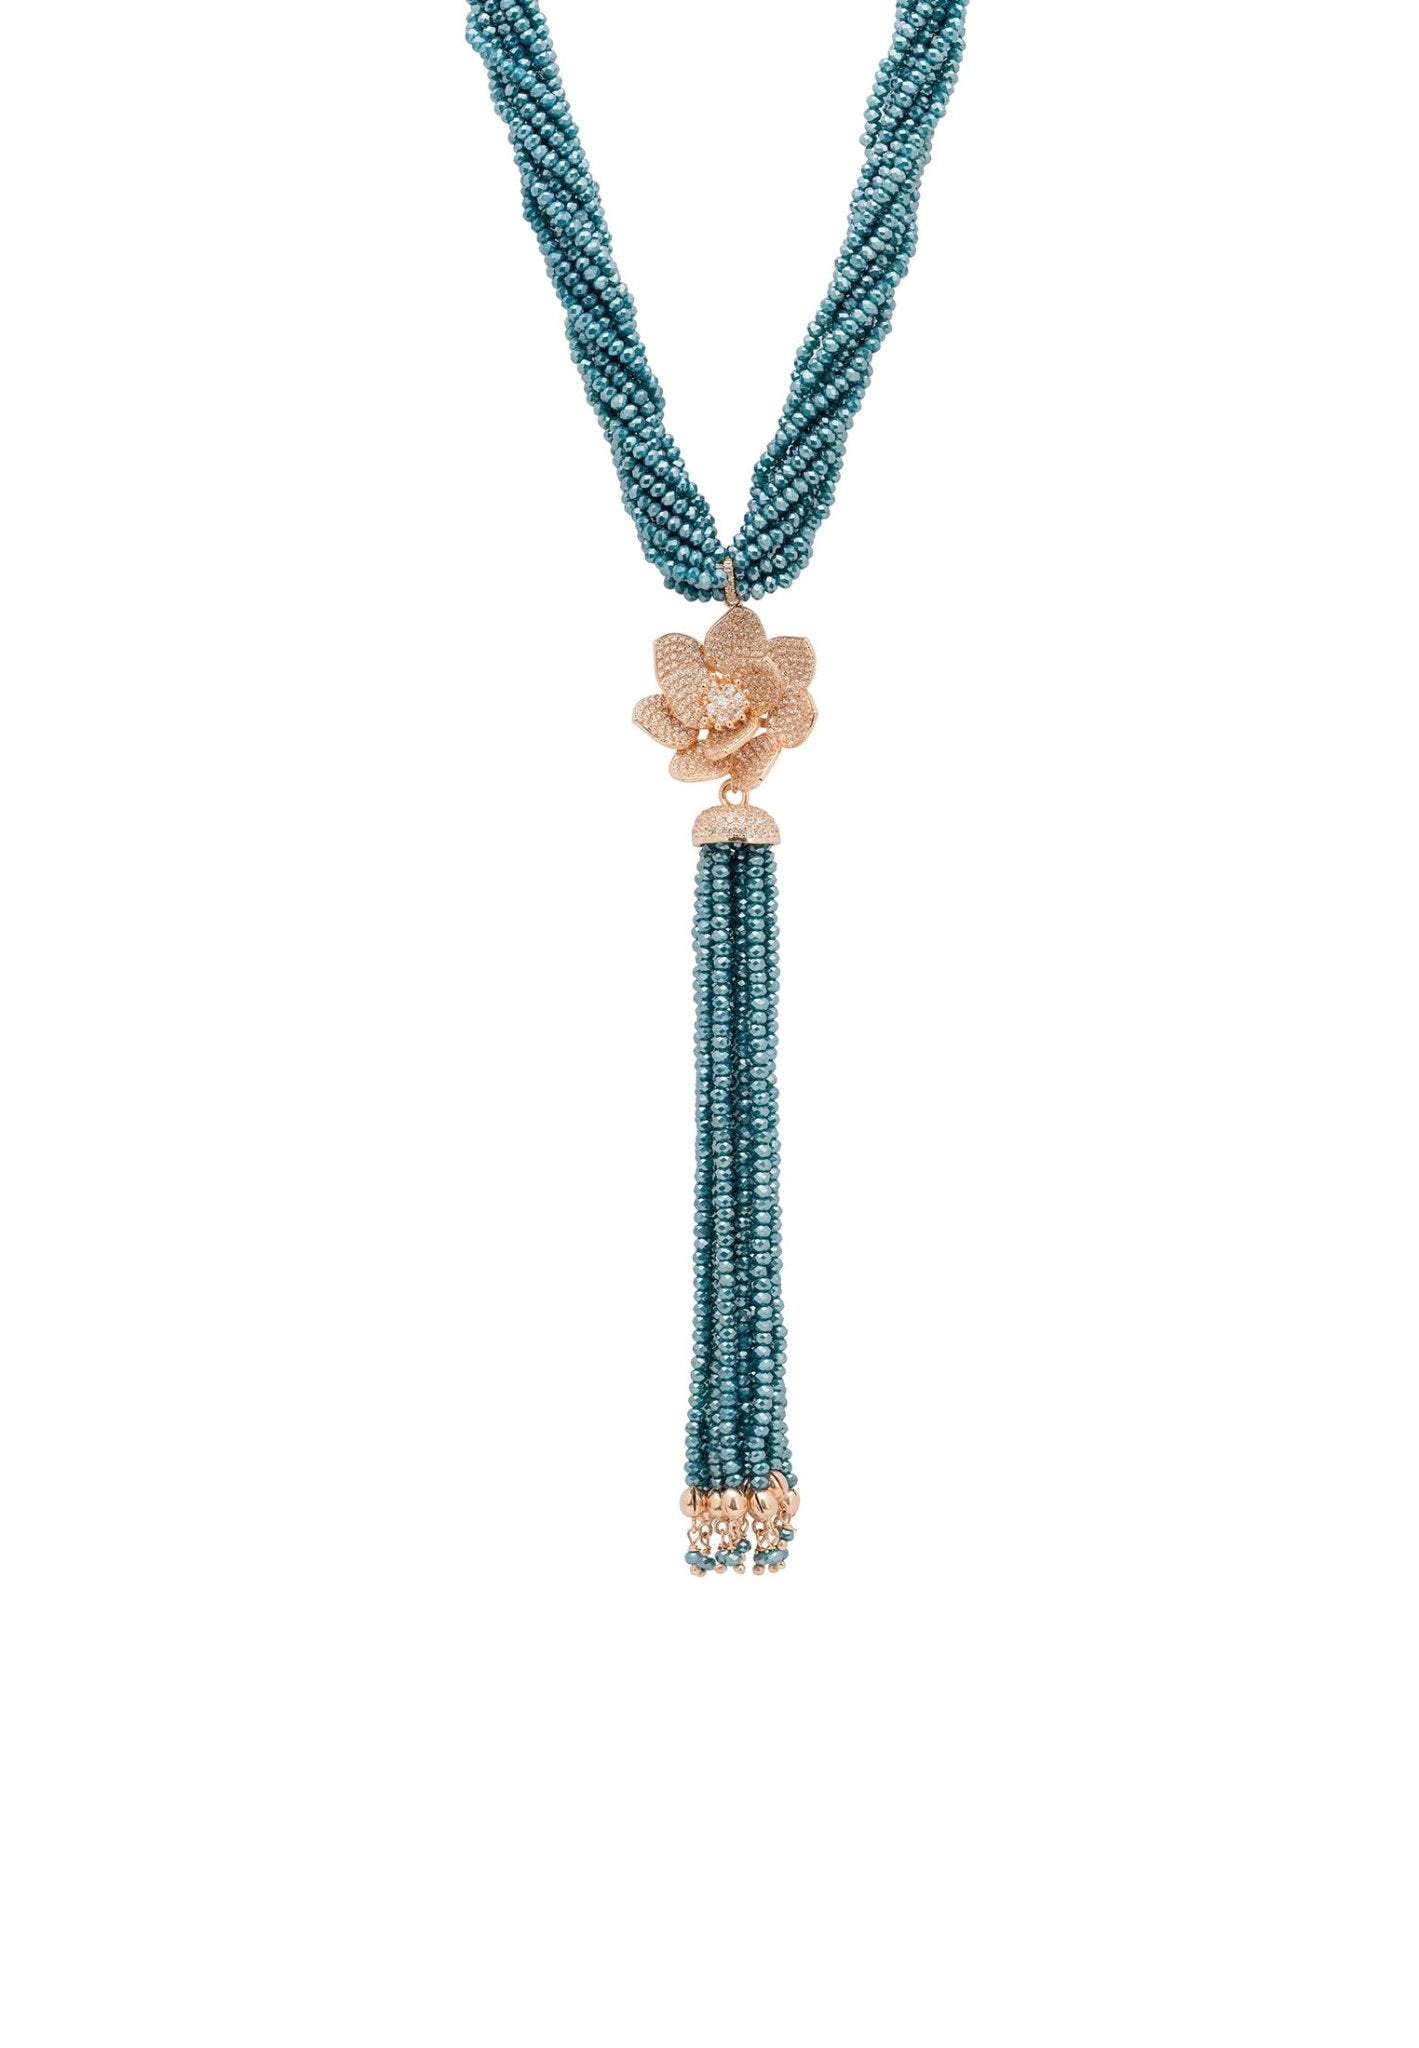 Lotus Flower Tassel Statement Necklace Turquoise Blue Rosegold - LATELITA Necklaces